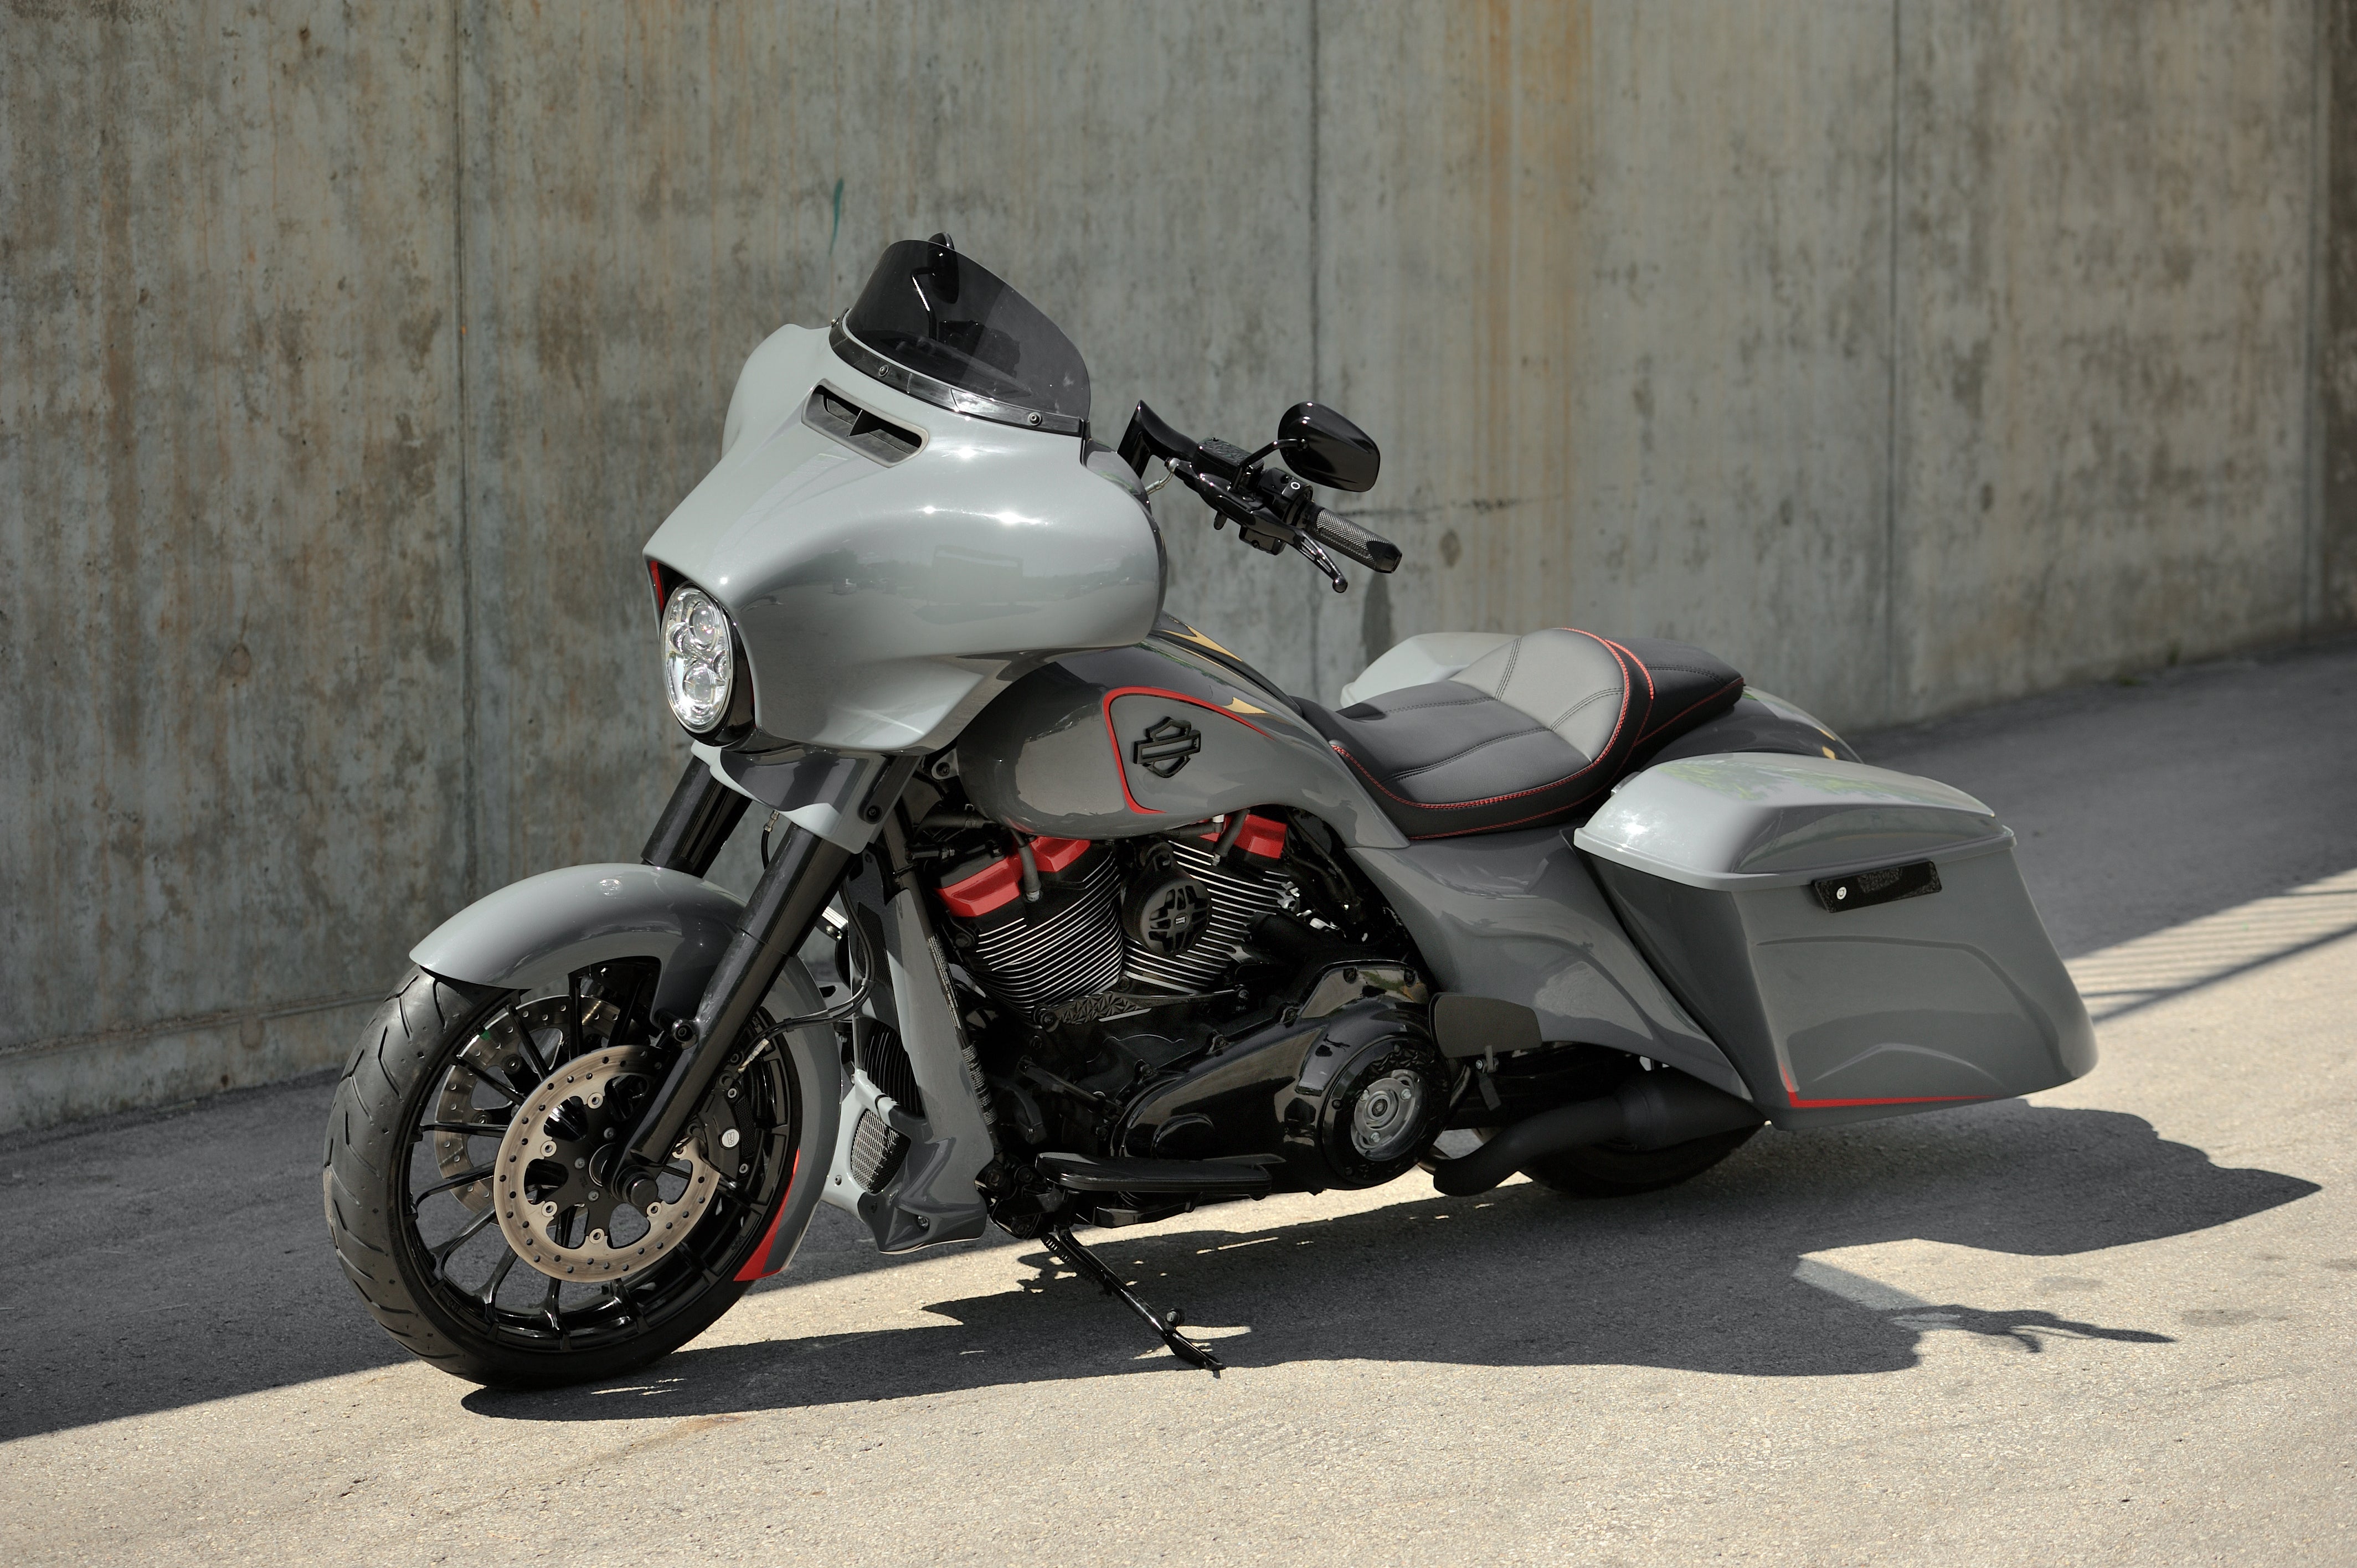 19" Wrapper front fender for Harley Davidson Touring models Gray perspective